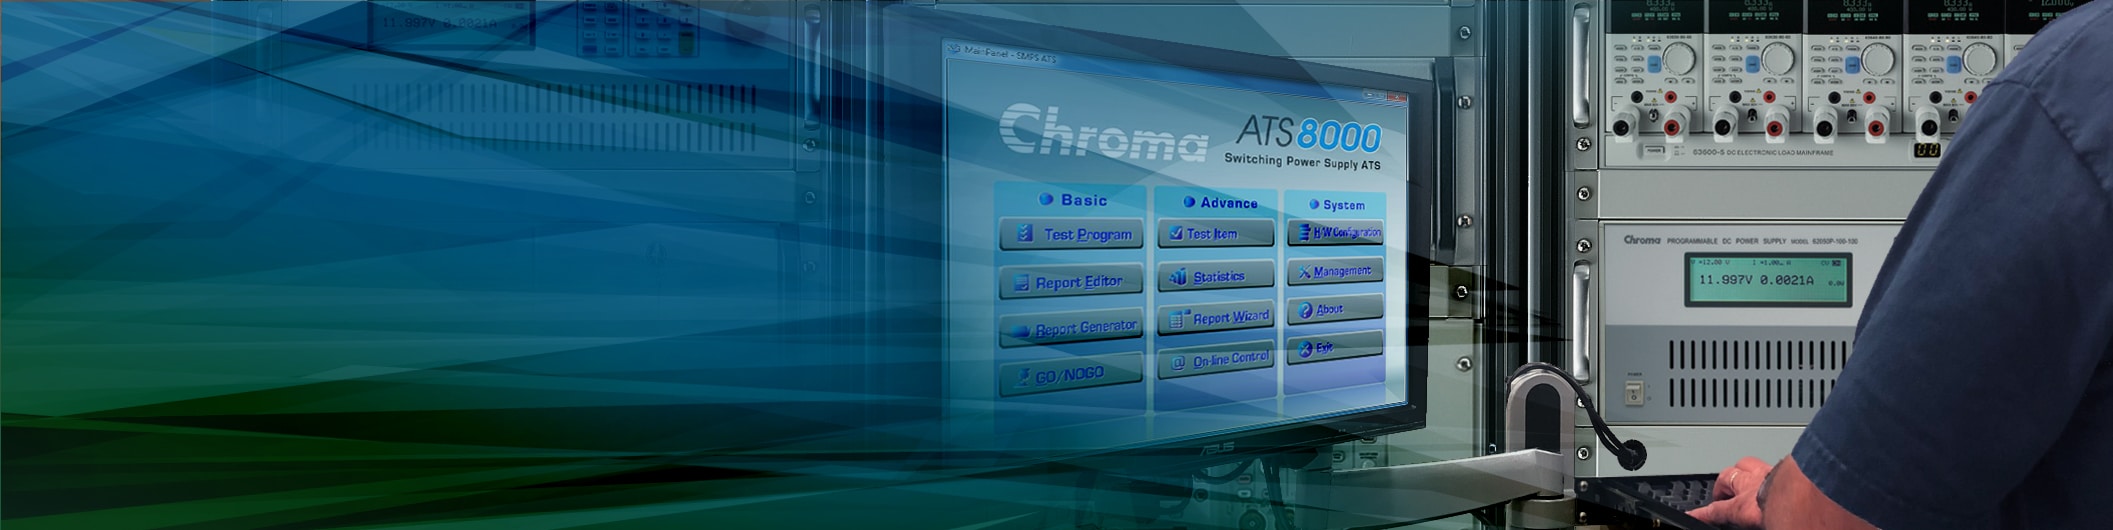 PowerPro Automated Test Software - Chroma